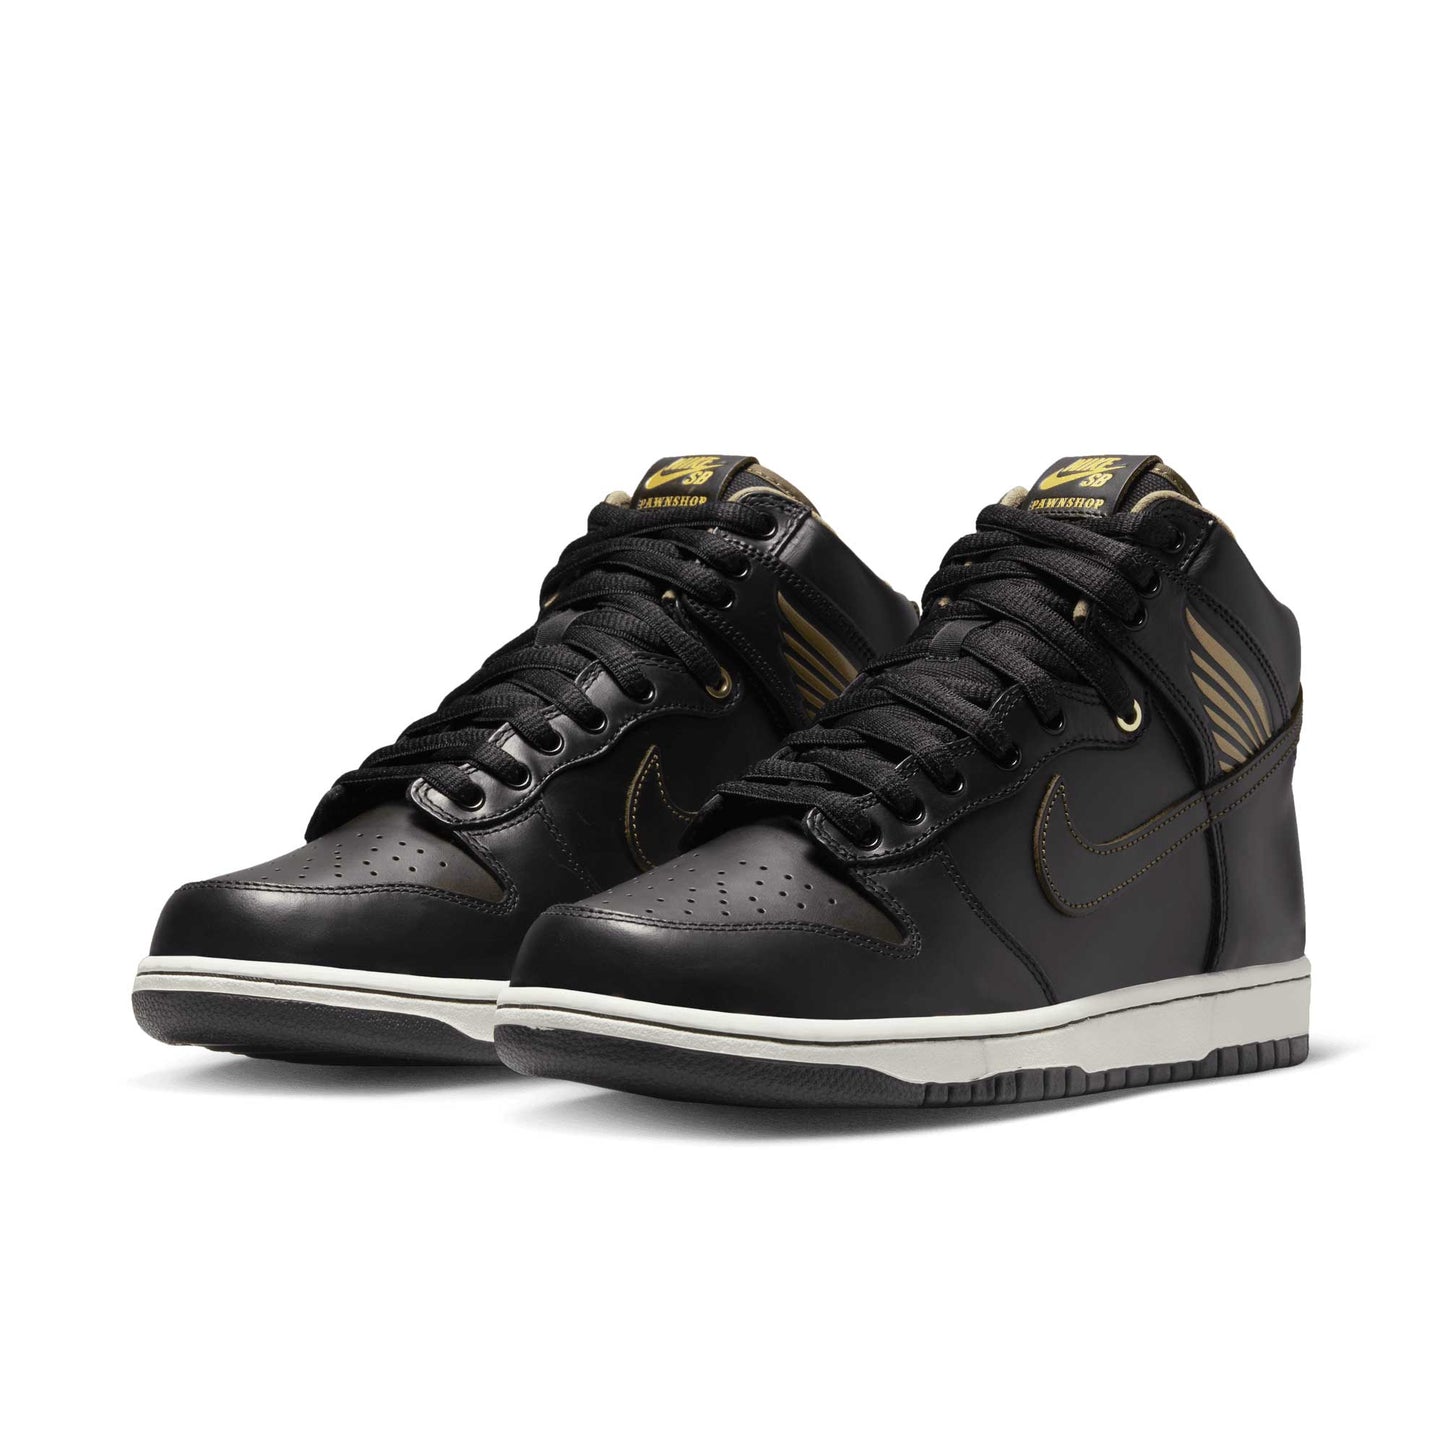 Nike SB Dunk High OG Pawnshop QS, black/black-metallic gold - Tiki Room Skateboards - 2